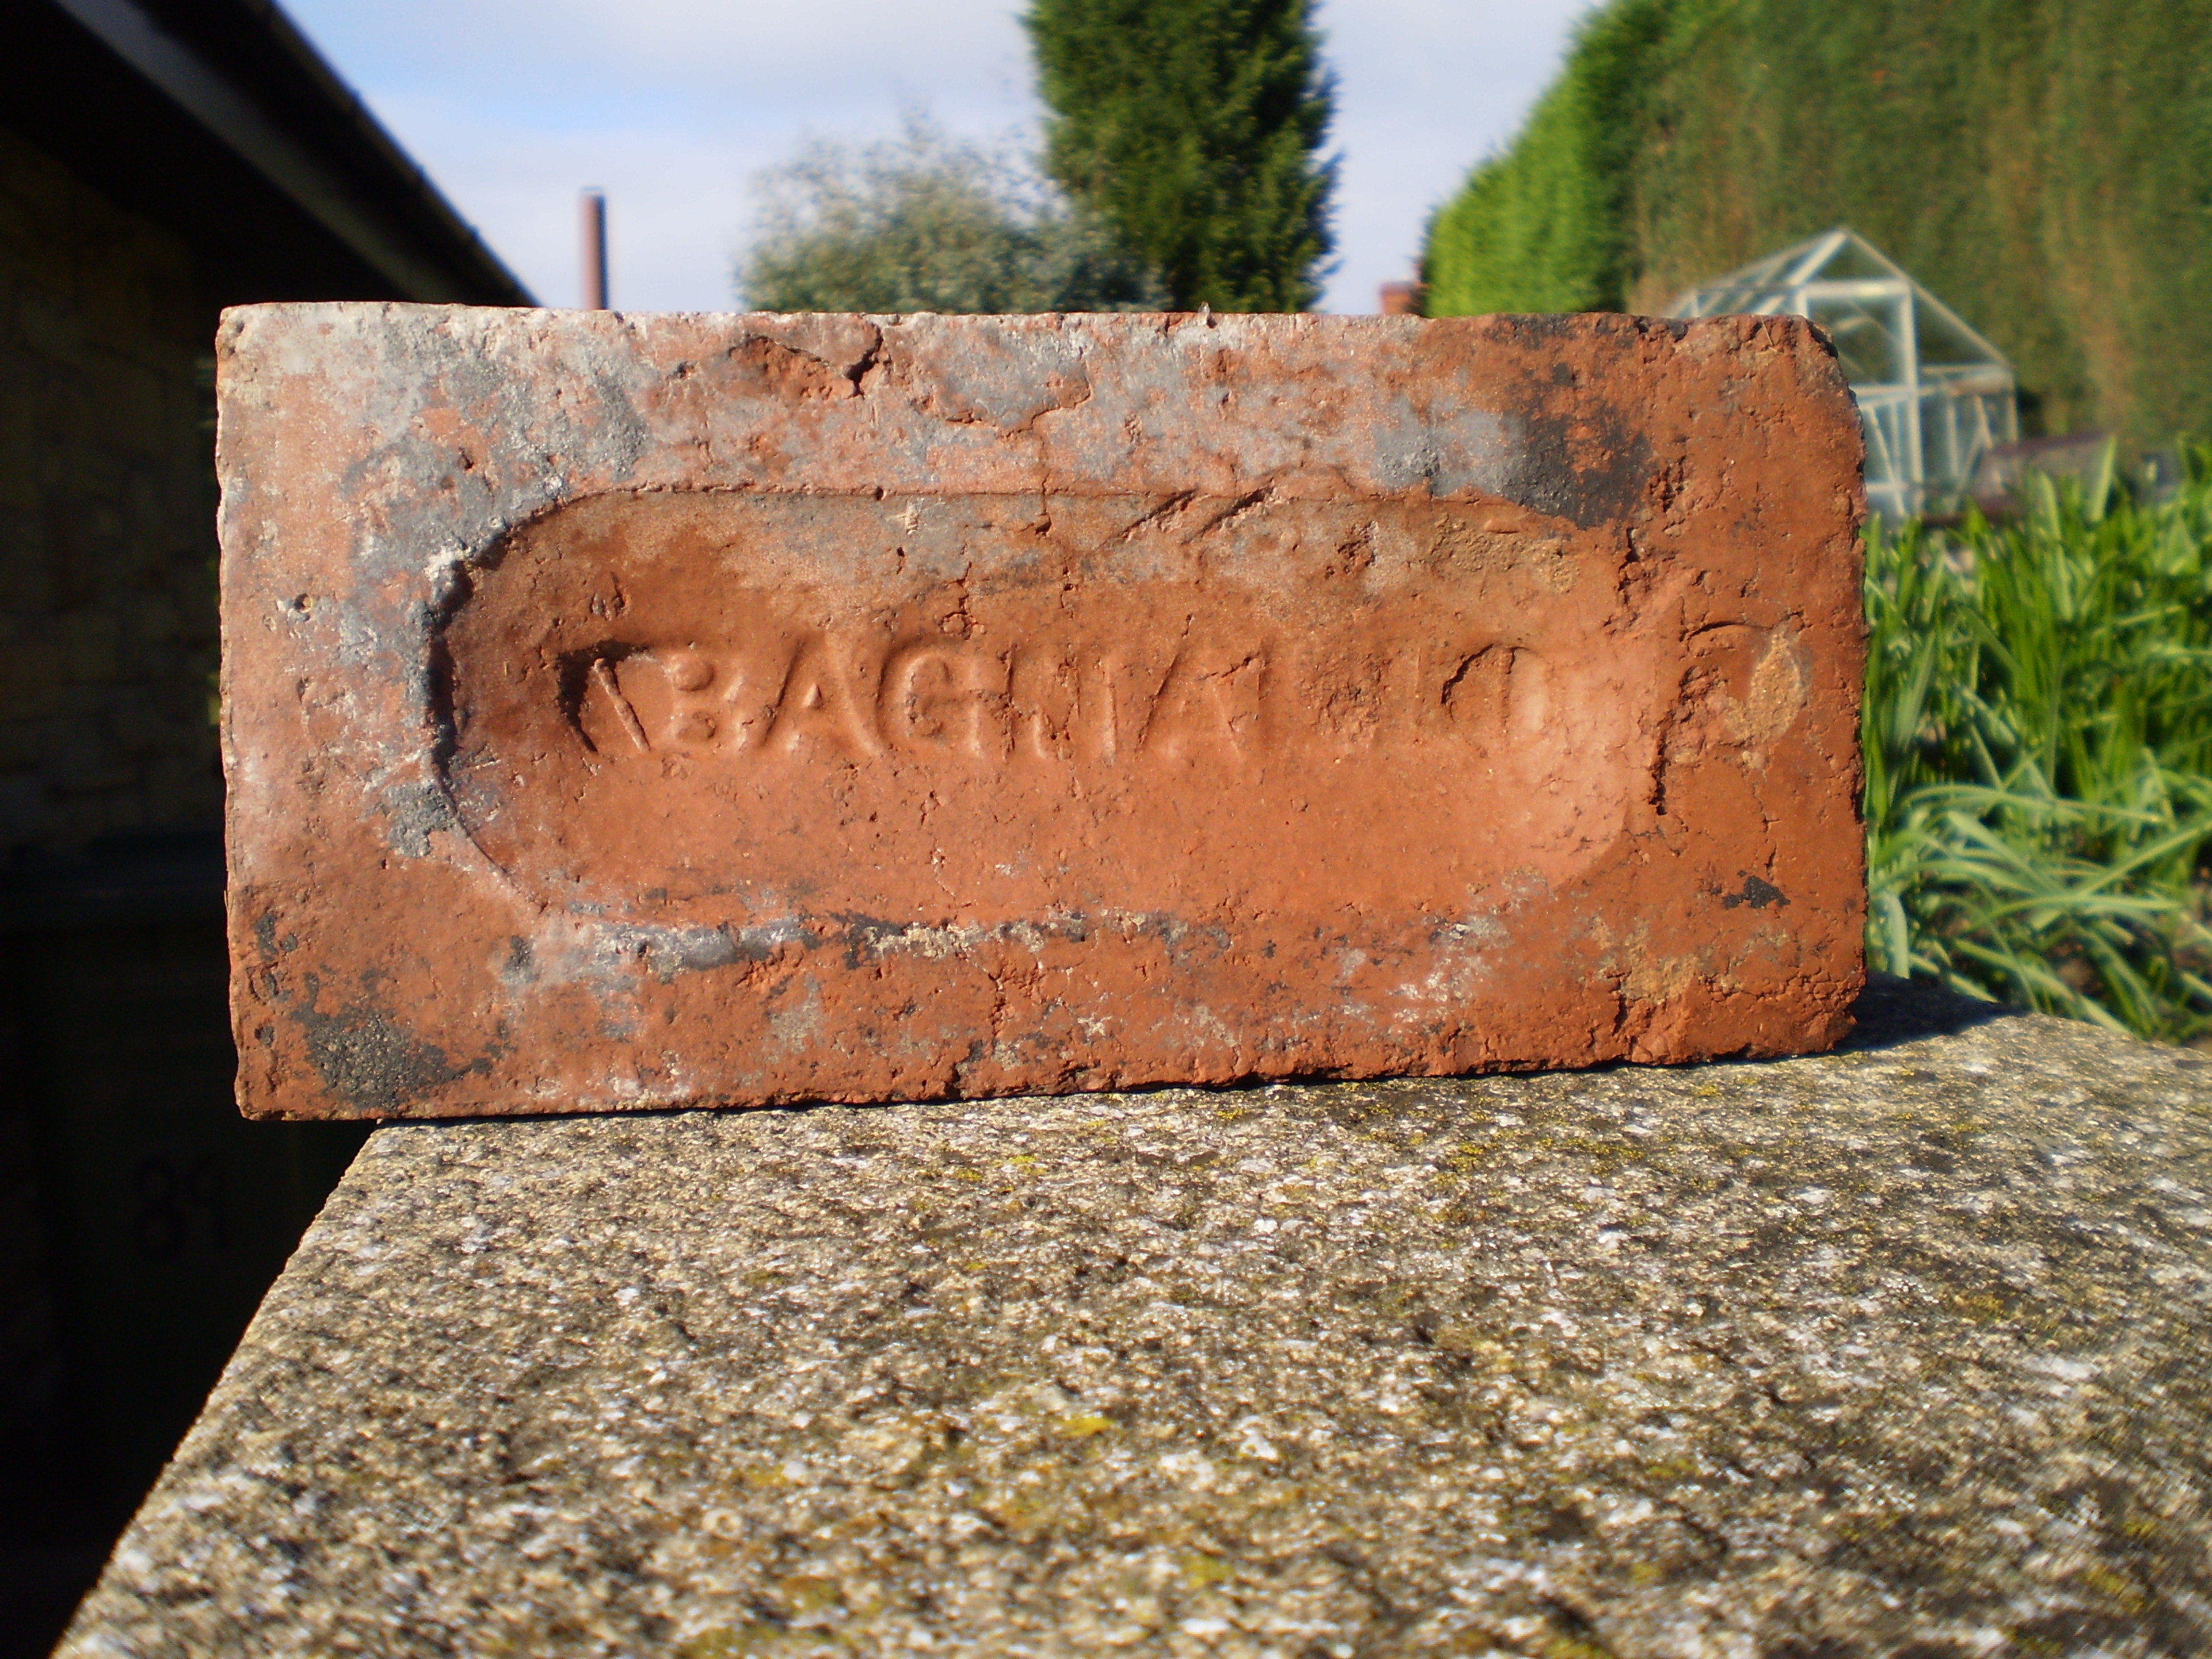 The Bagnall Brick